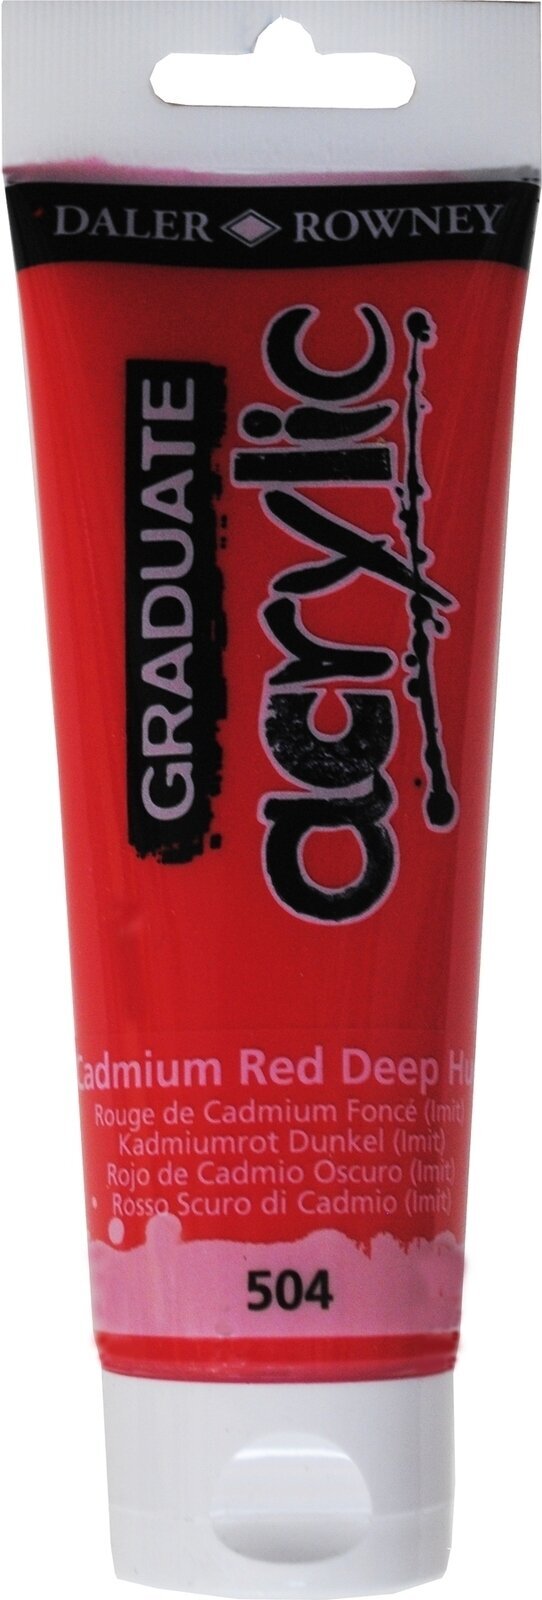 Acrylverf Daler Rowney Graduate Acrylverf Cadmium Red Deep Hue 120 ml 1 stuk